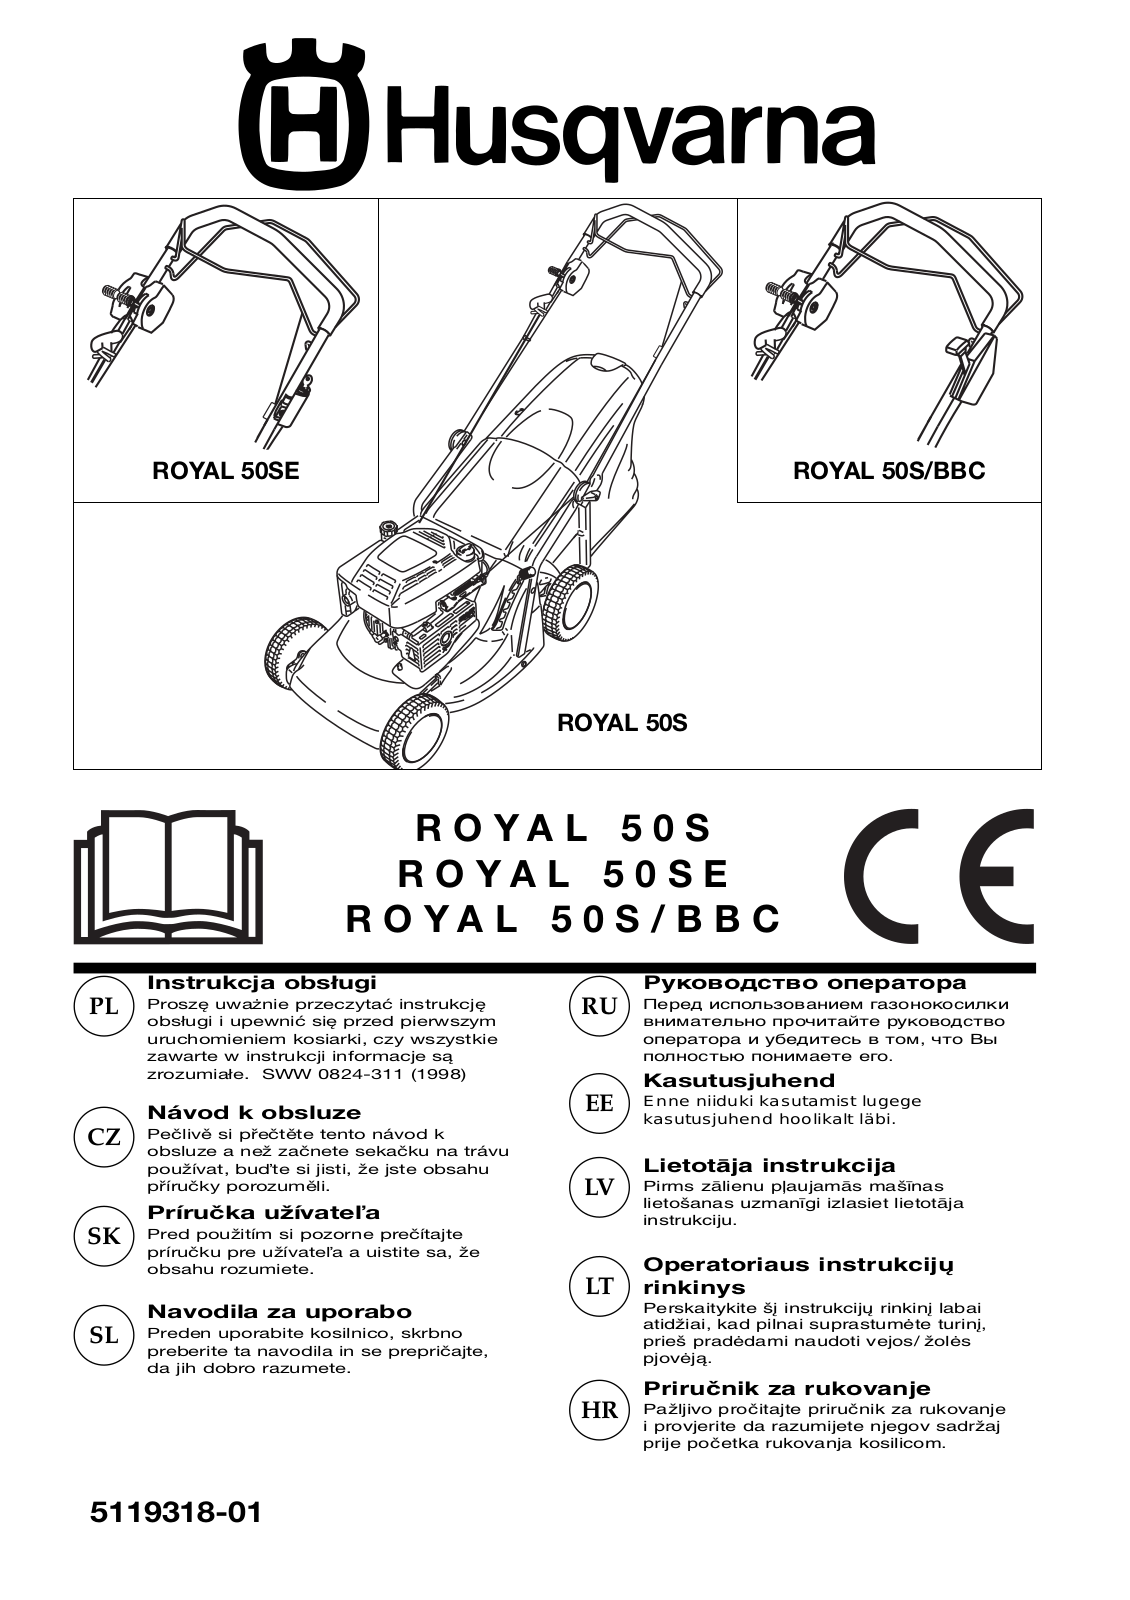 Husqvarna ROYAL 50 SE, ROYAL 50 S BBC, ROYAL 50 S User Manual